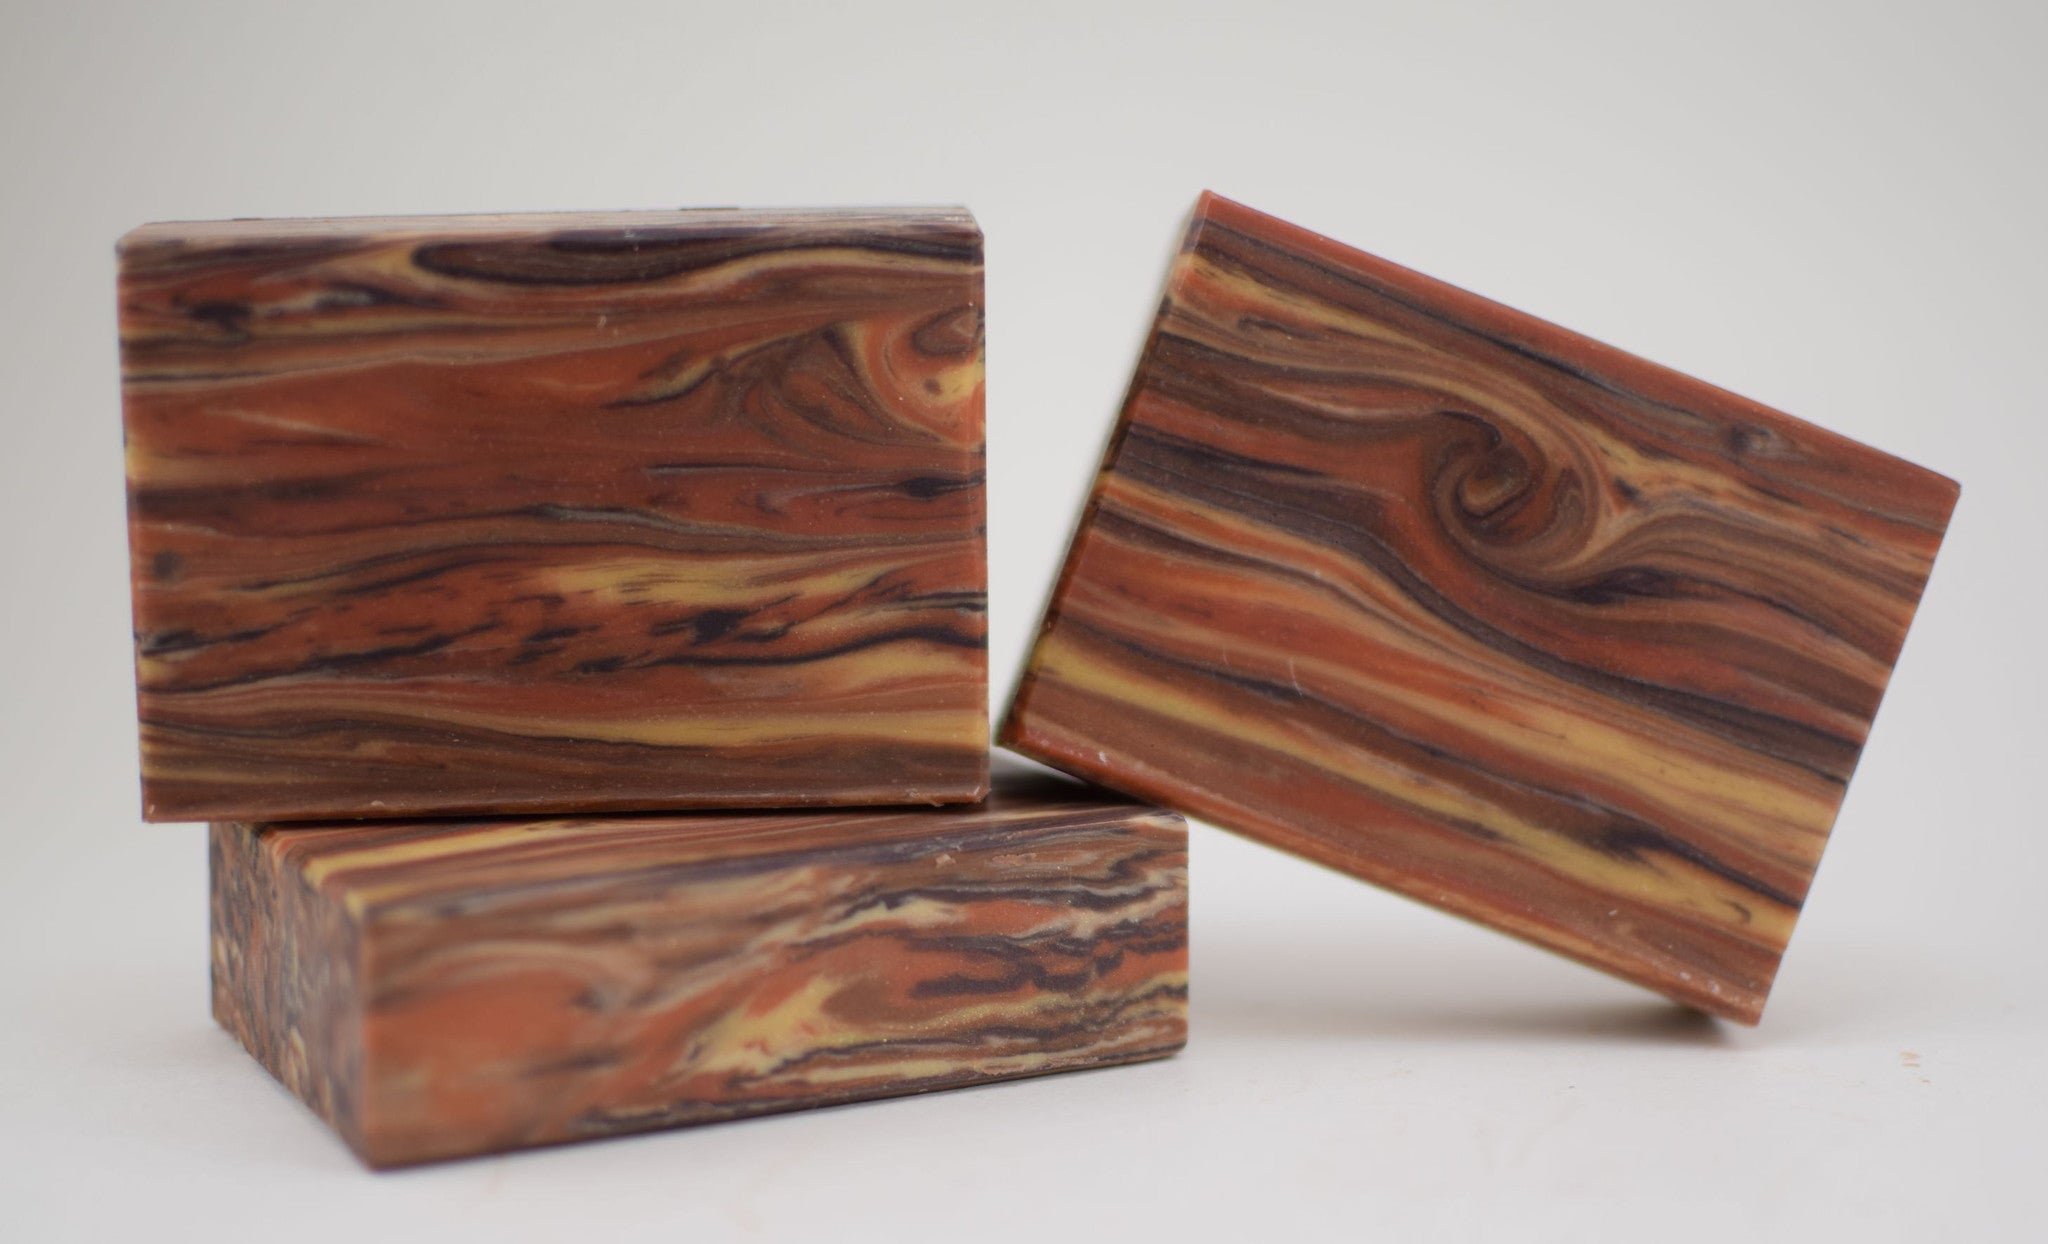 Wood You Like Some Soap?